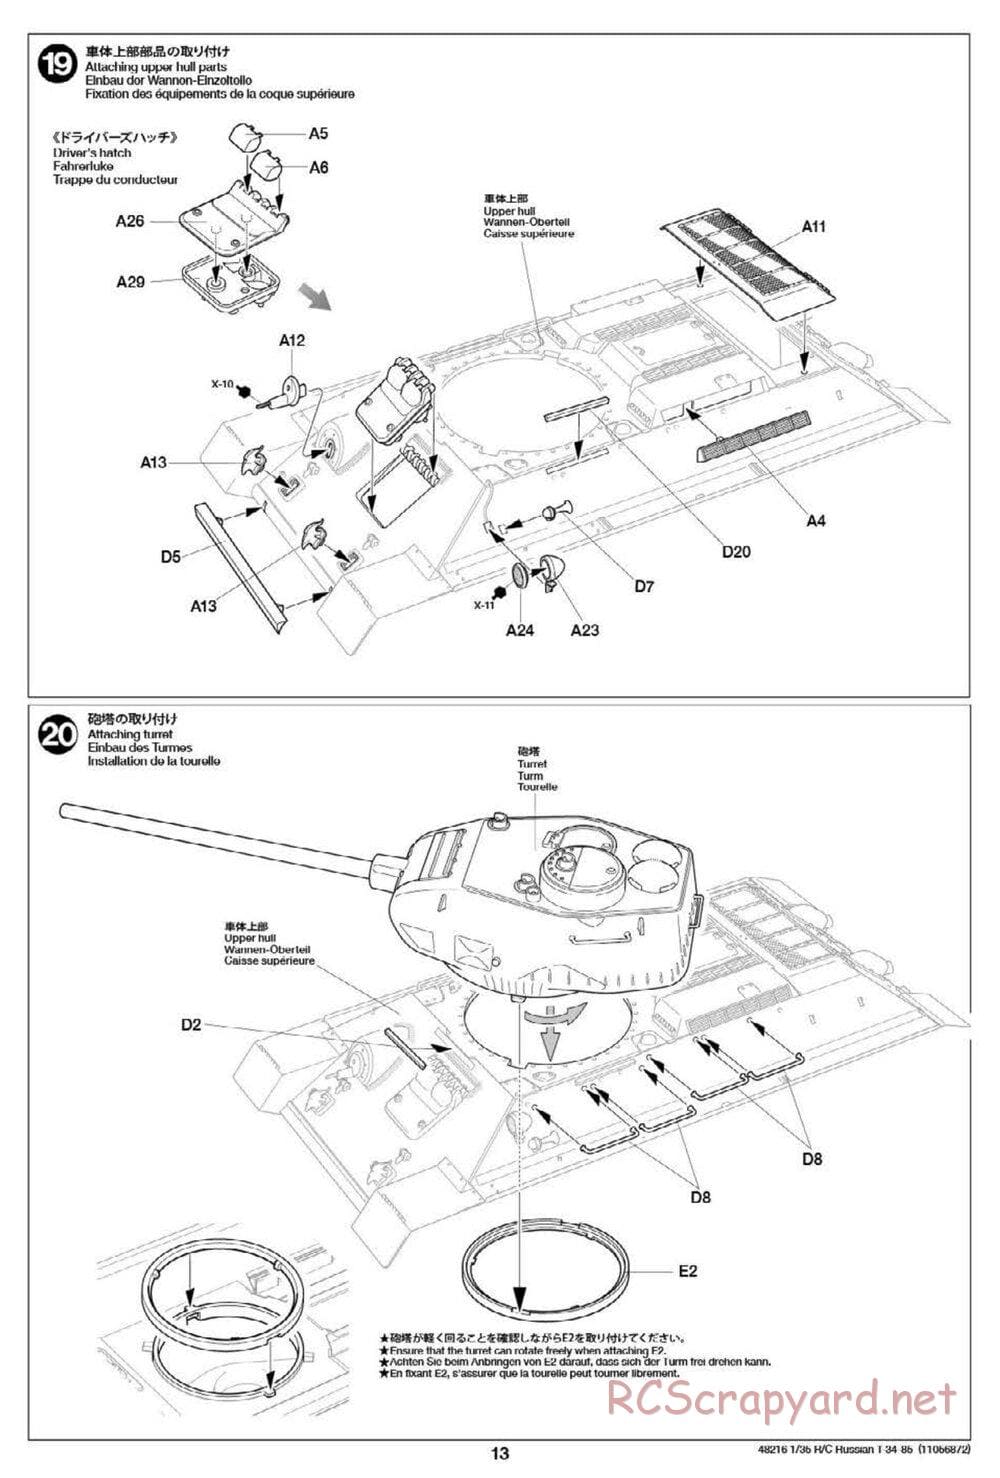 Tamiya - Russian Medium Tank T-34-85 - 1/35 Scale Chassis - Manual - Page 13